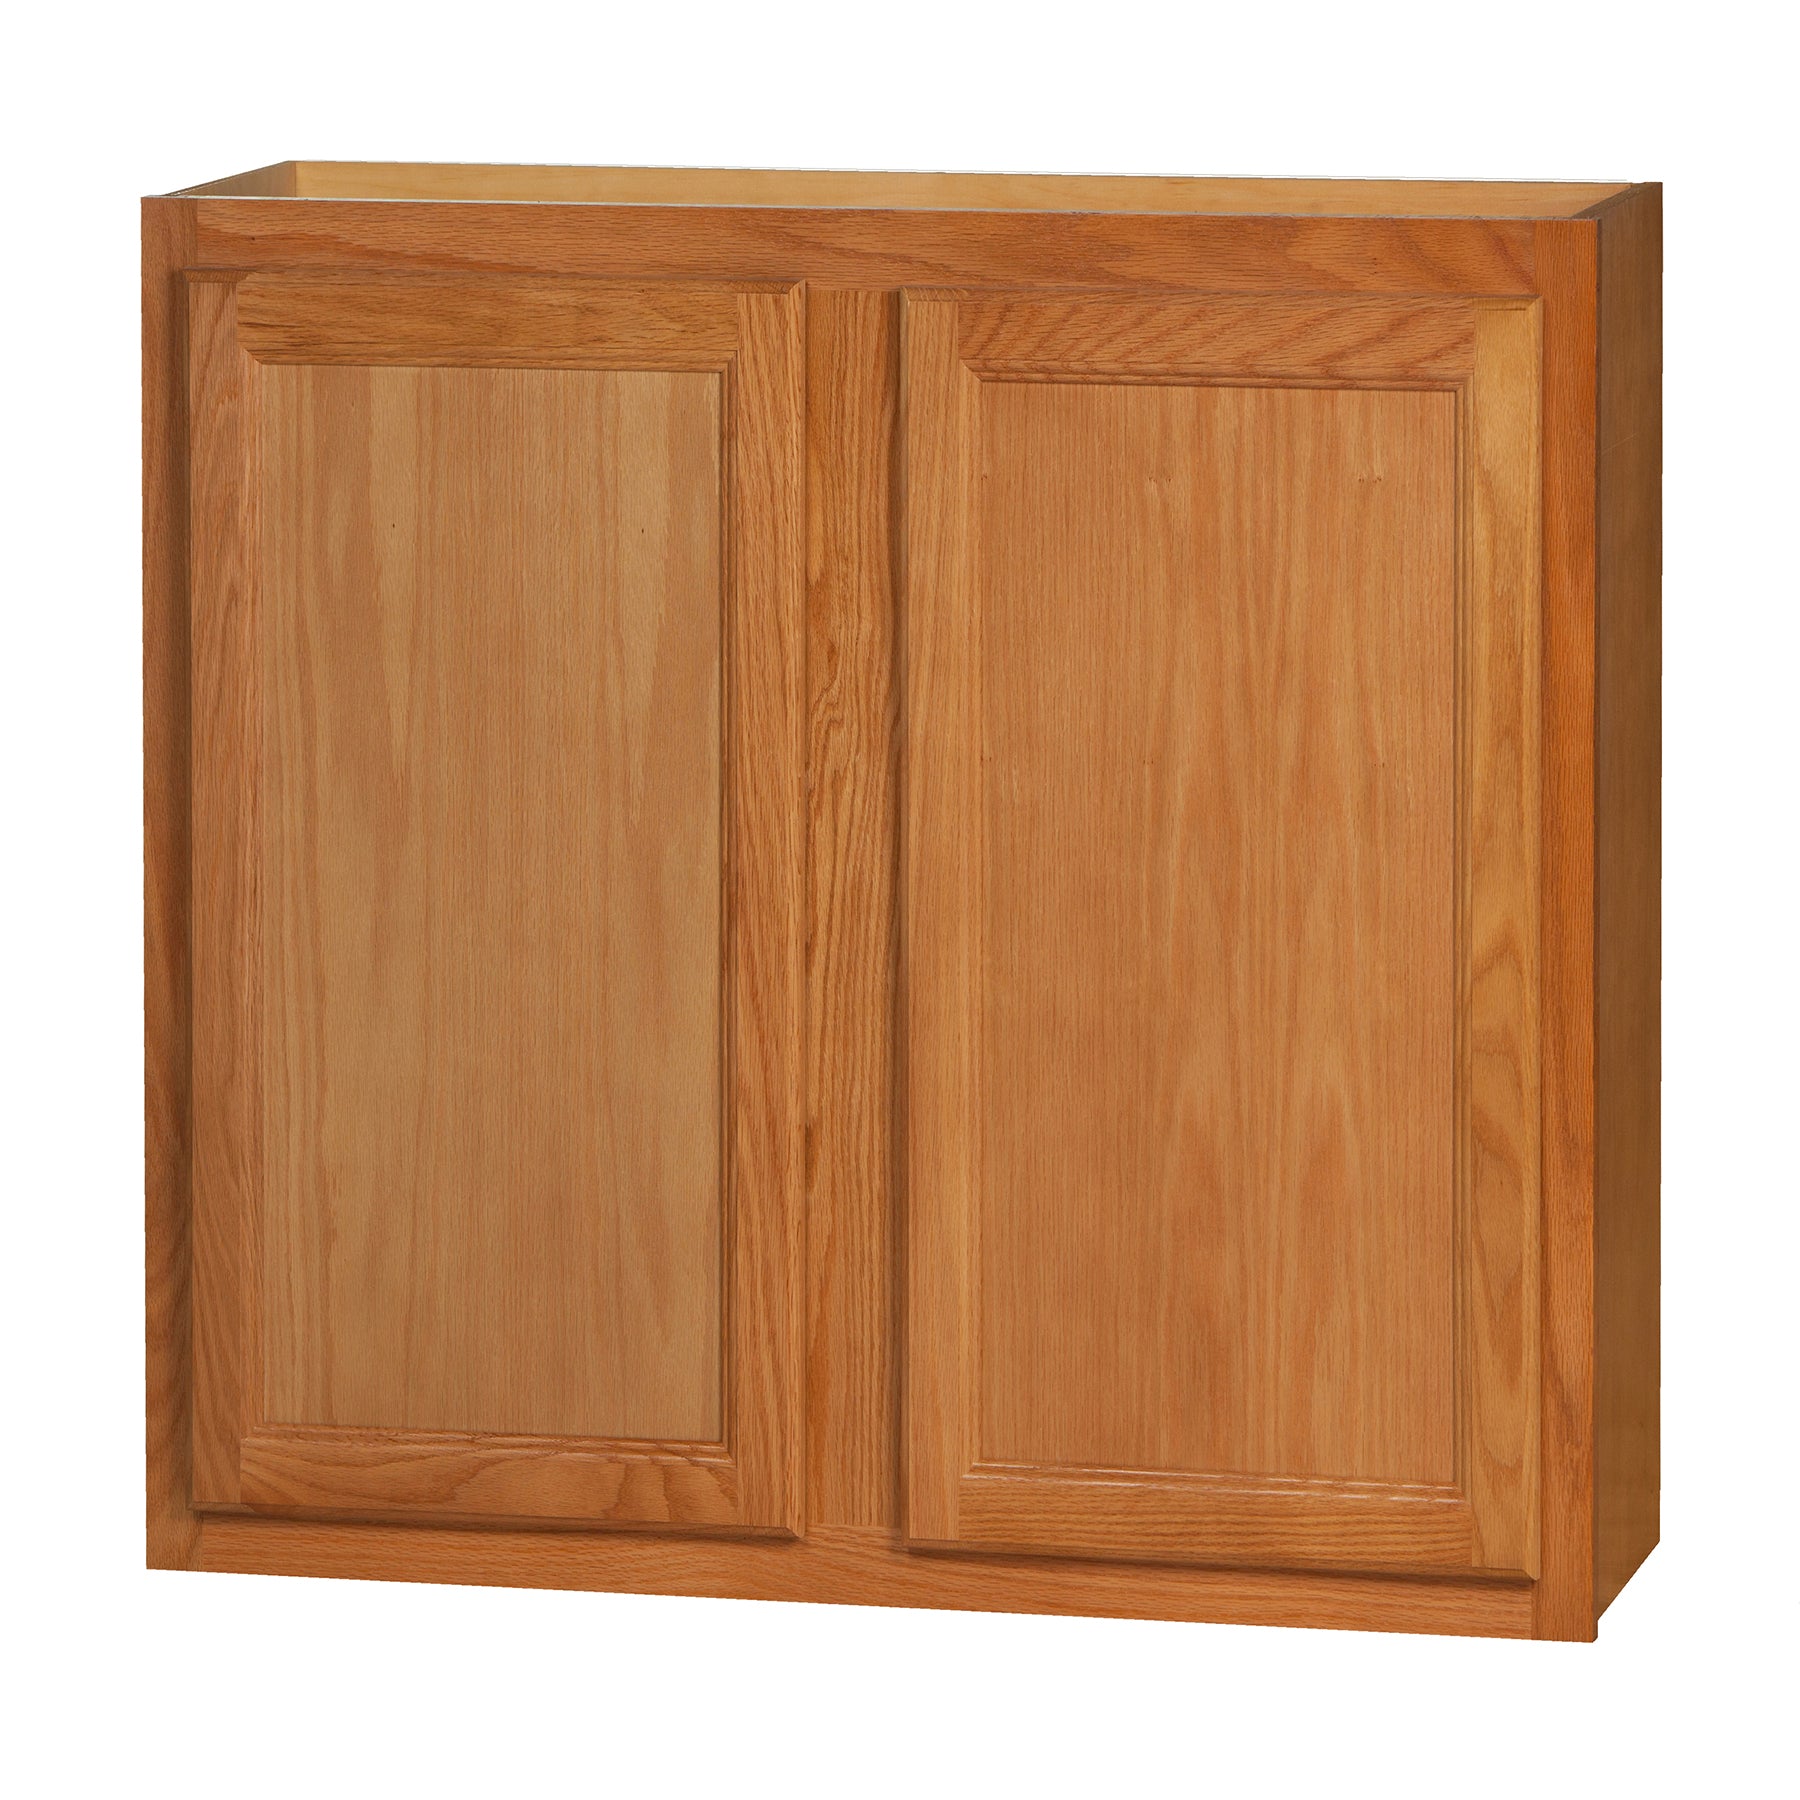 30 inch Wall Cabinets - Chadwood Shaker - 33 Inch W x 30 Inch H x 12 Inch D